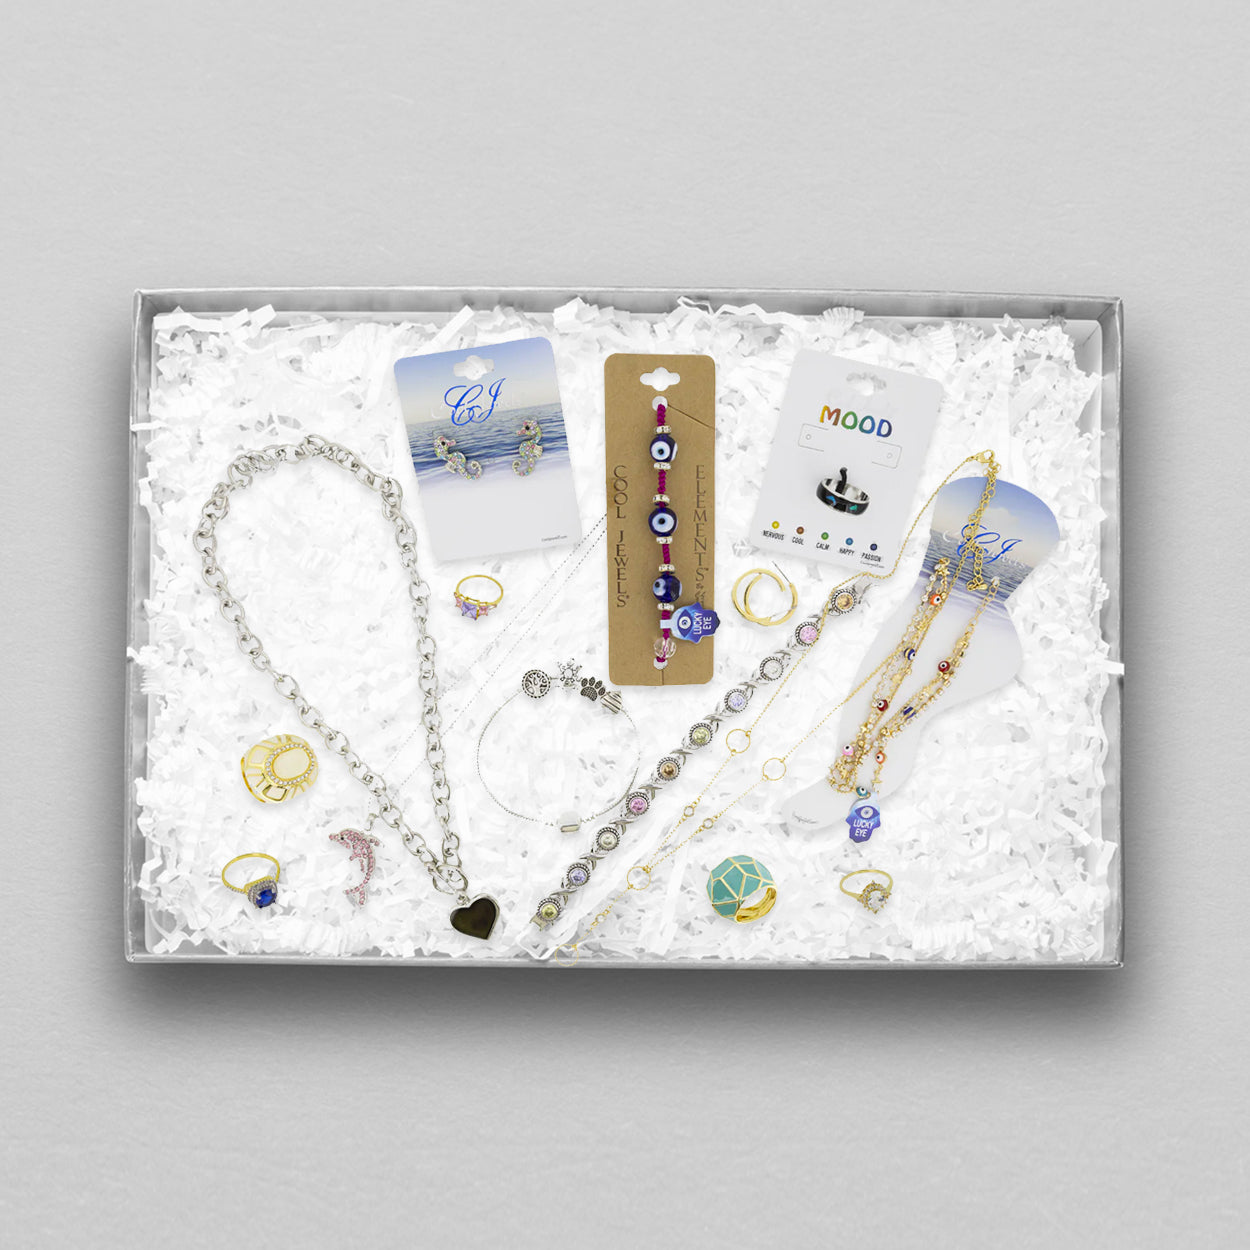 Hogies Mystery Jewellery Gift Box £15